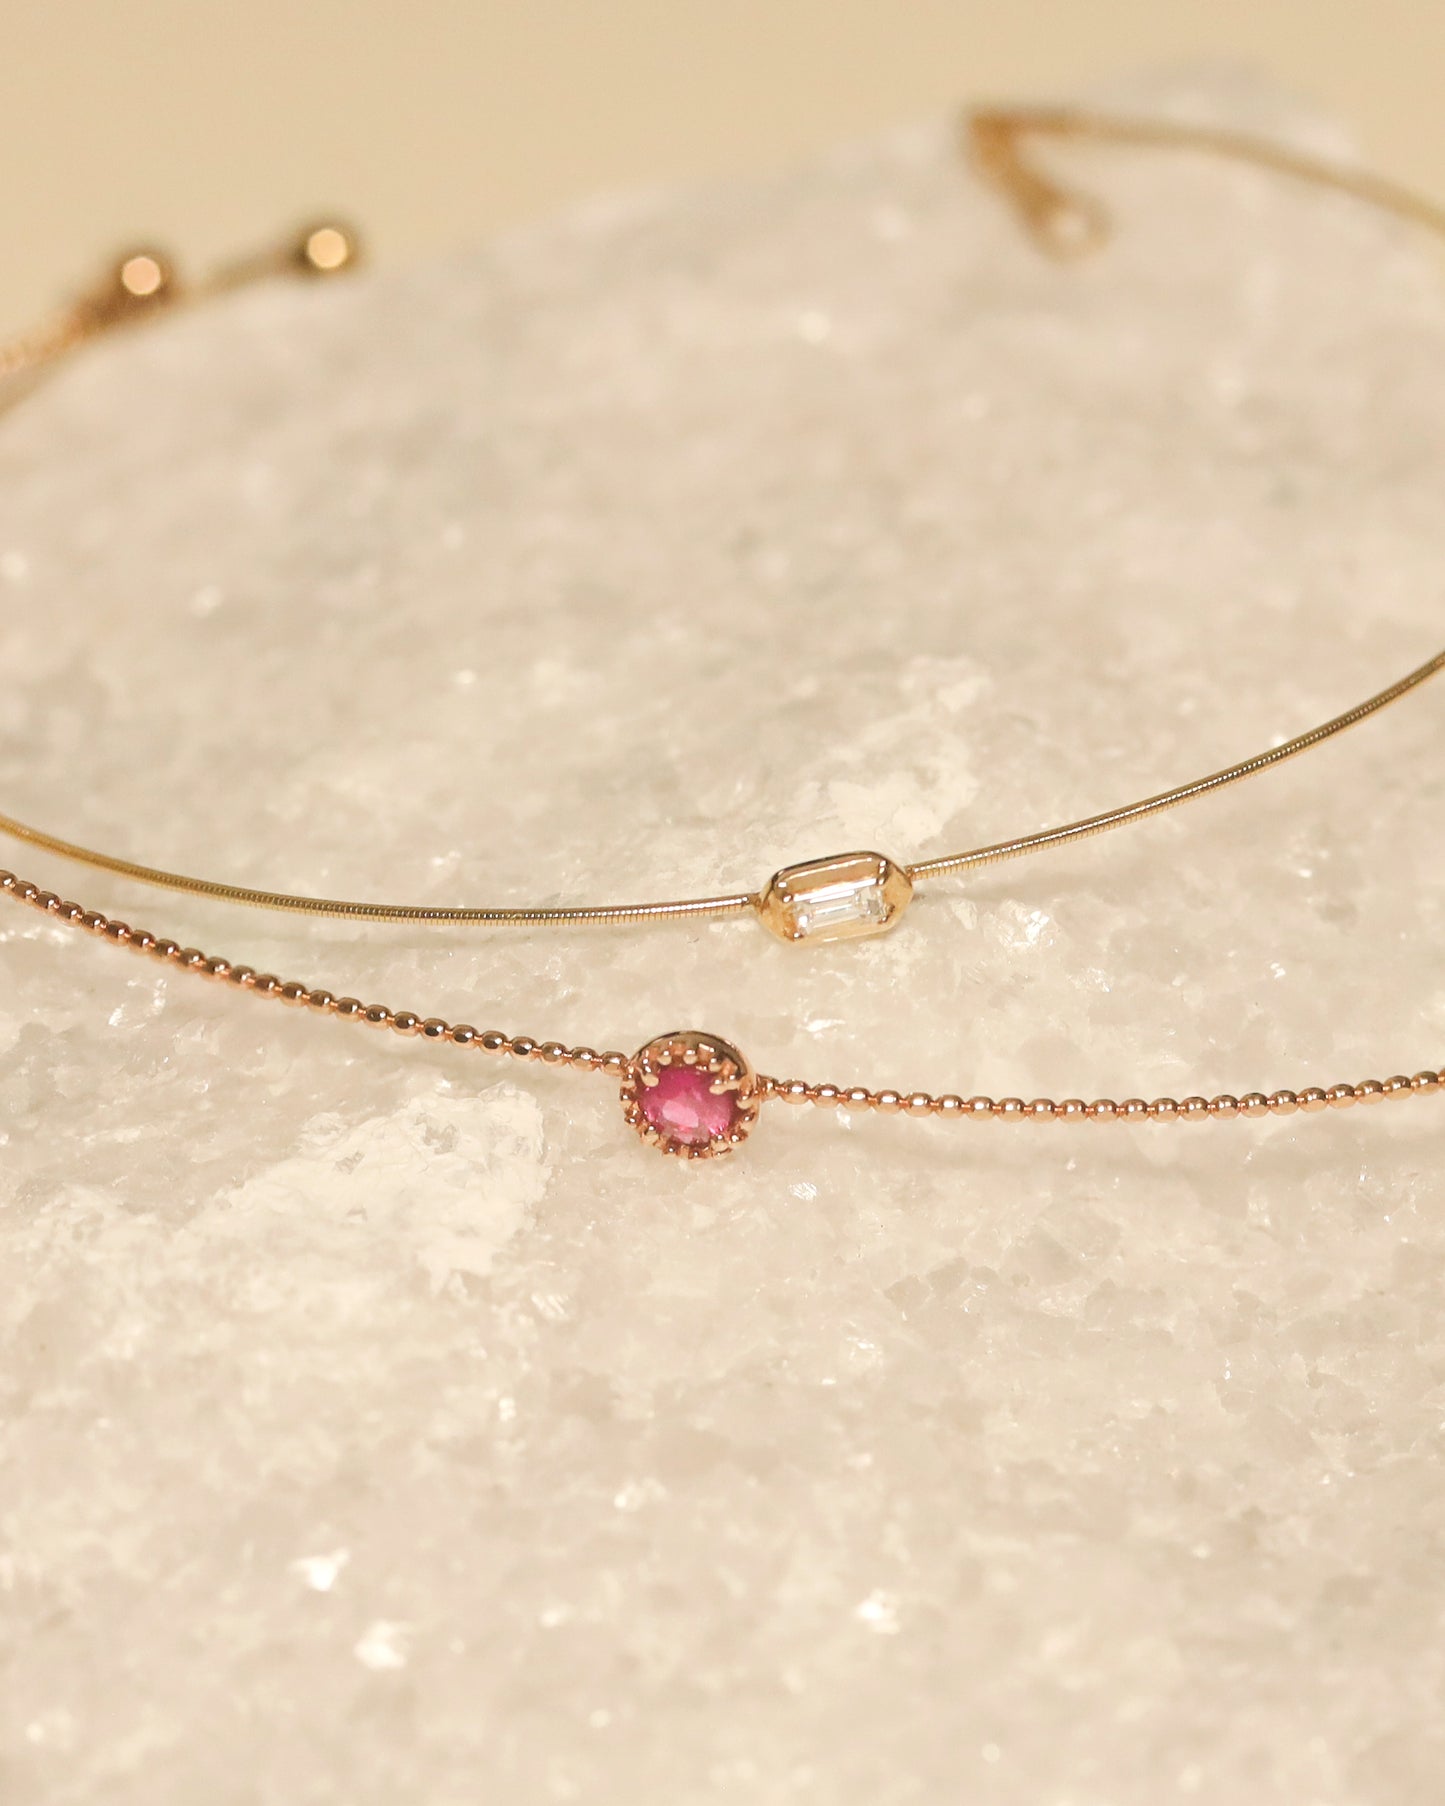 【Efforless Chic】Pink Sapphire Diamond Bracelet